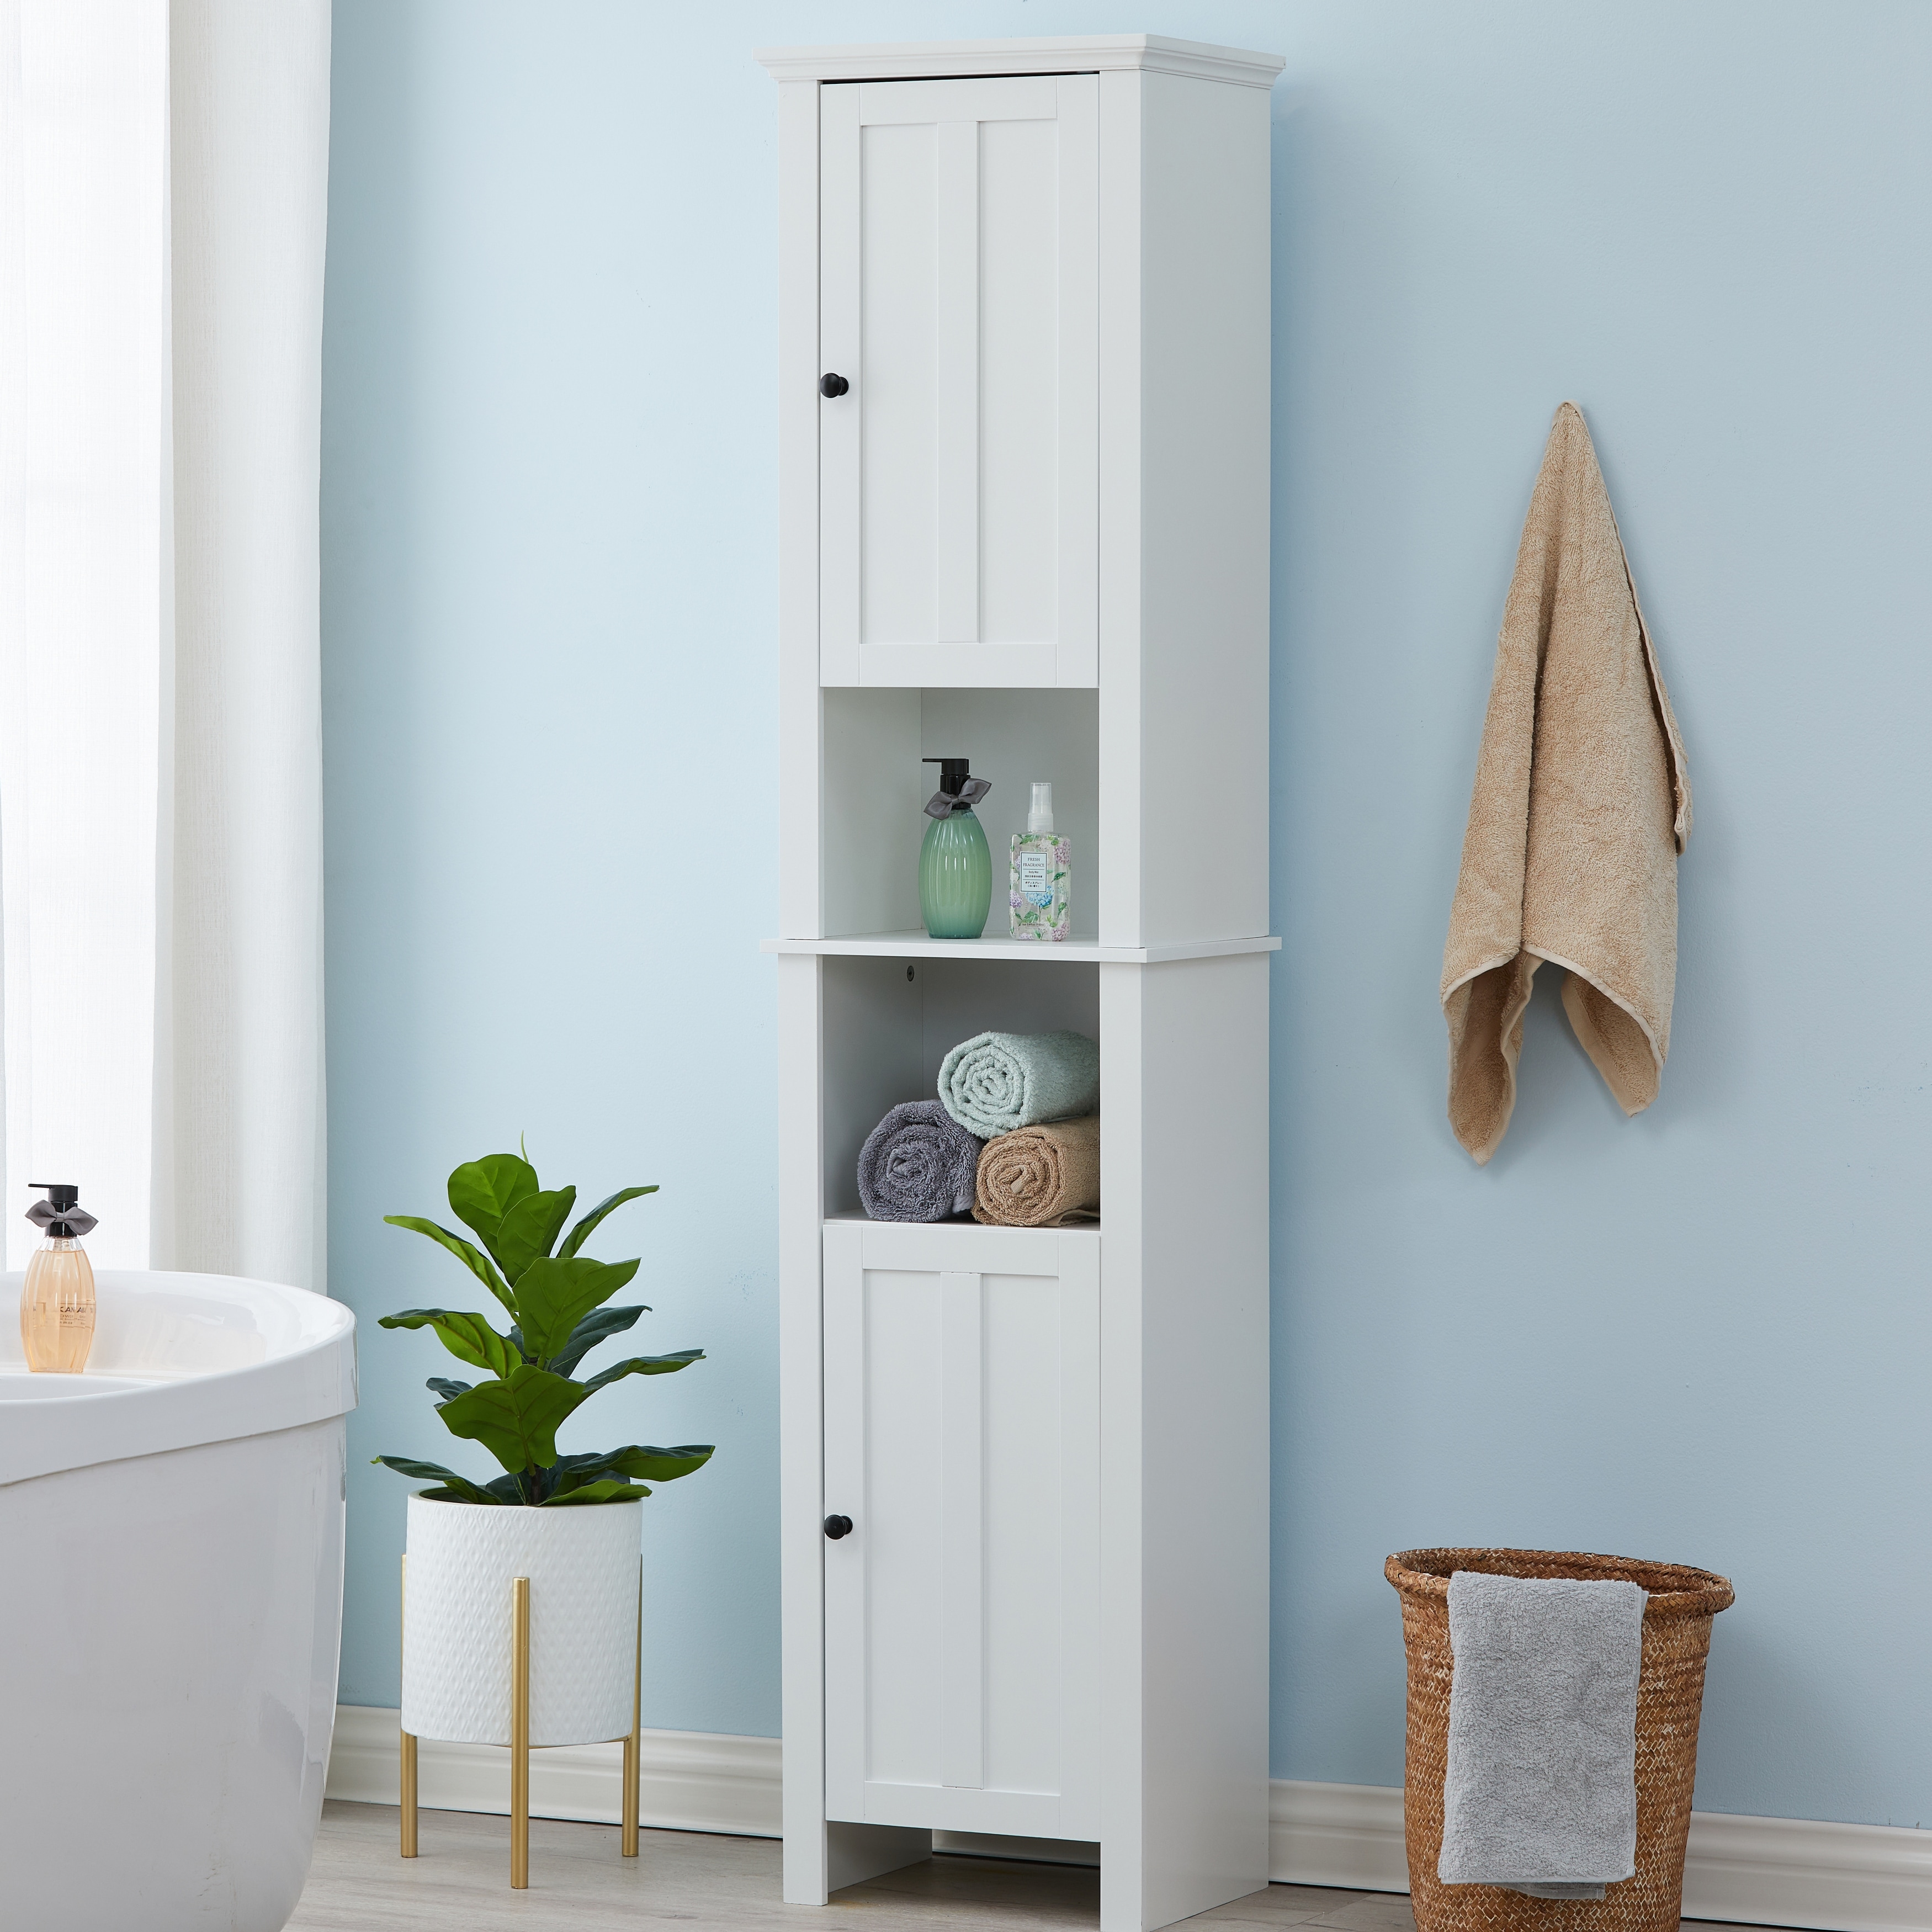 Tall White Finish Slim Linen Tower Bathroom Towel Storage Cabinet Wood Organizer